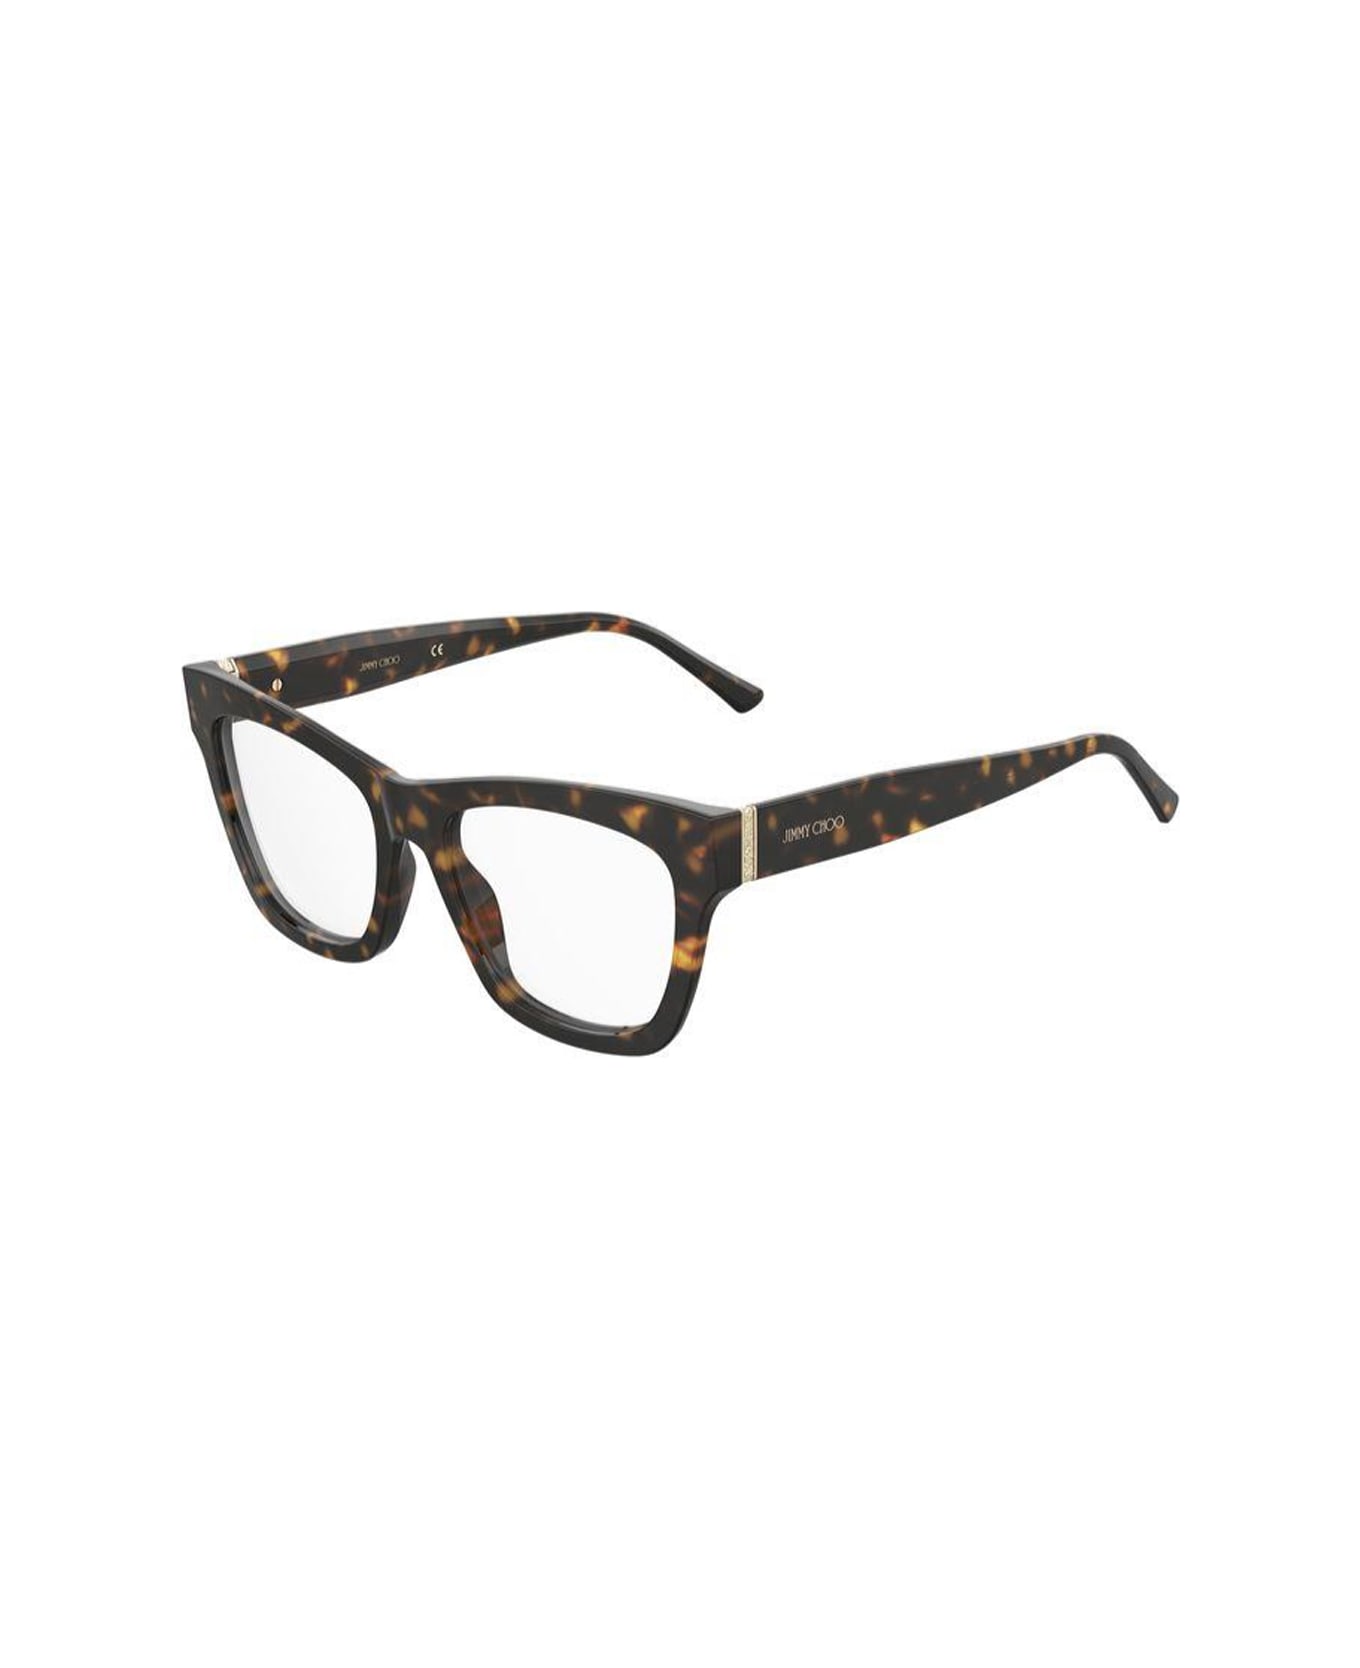 Jimmy Choo Eyewear Jc351 086/18 Glasses - Marrone アイウェア